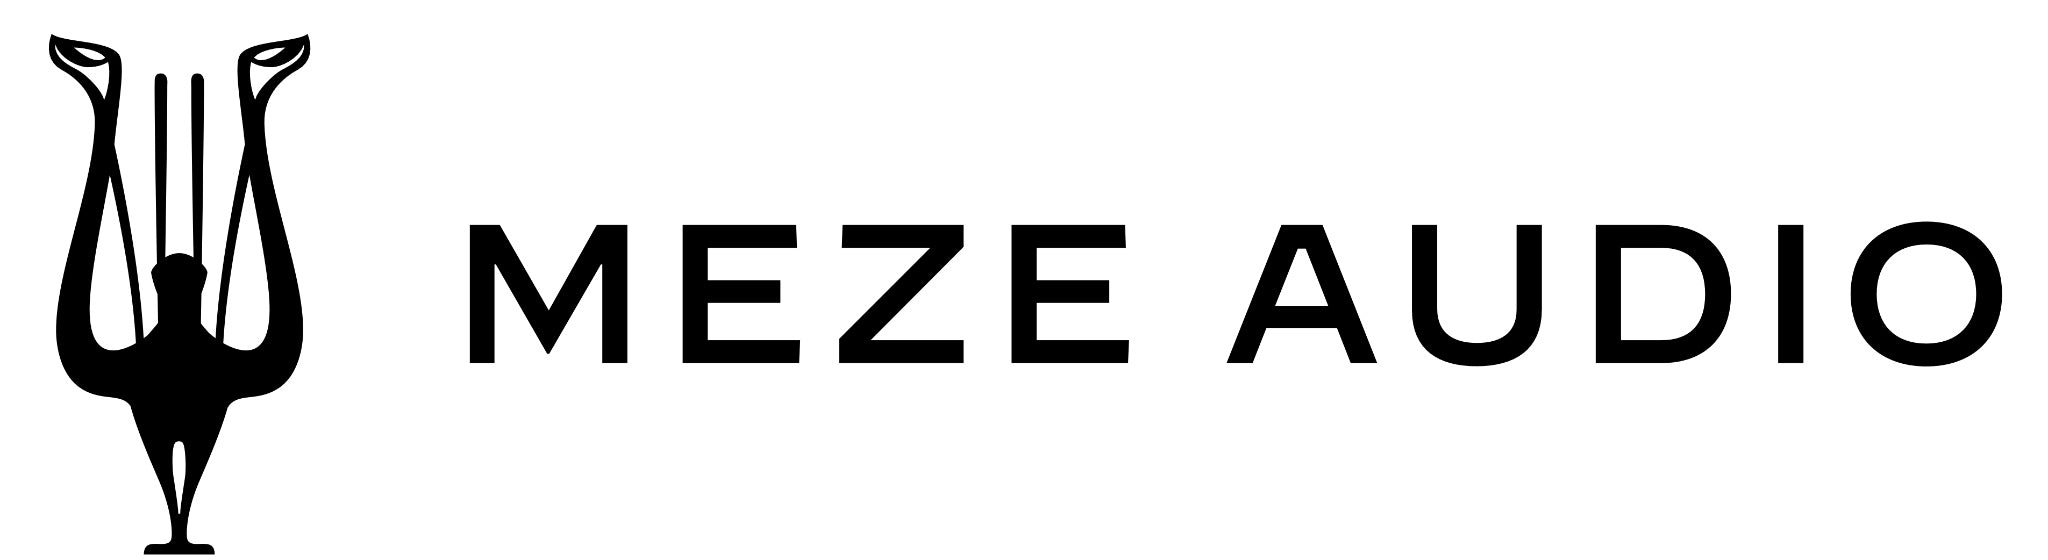 Meze Audio new horizontal logo black